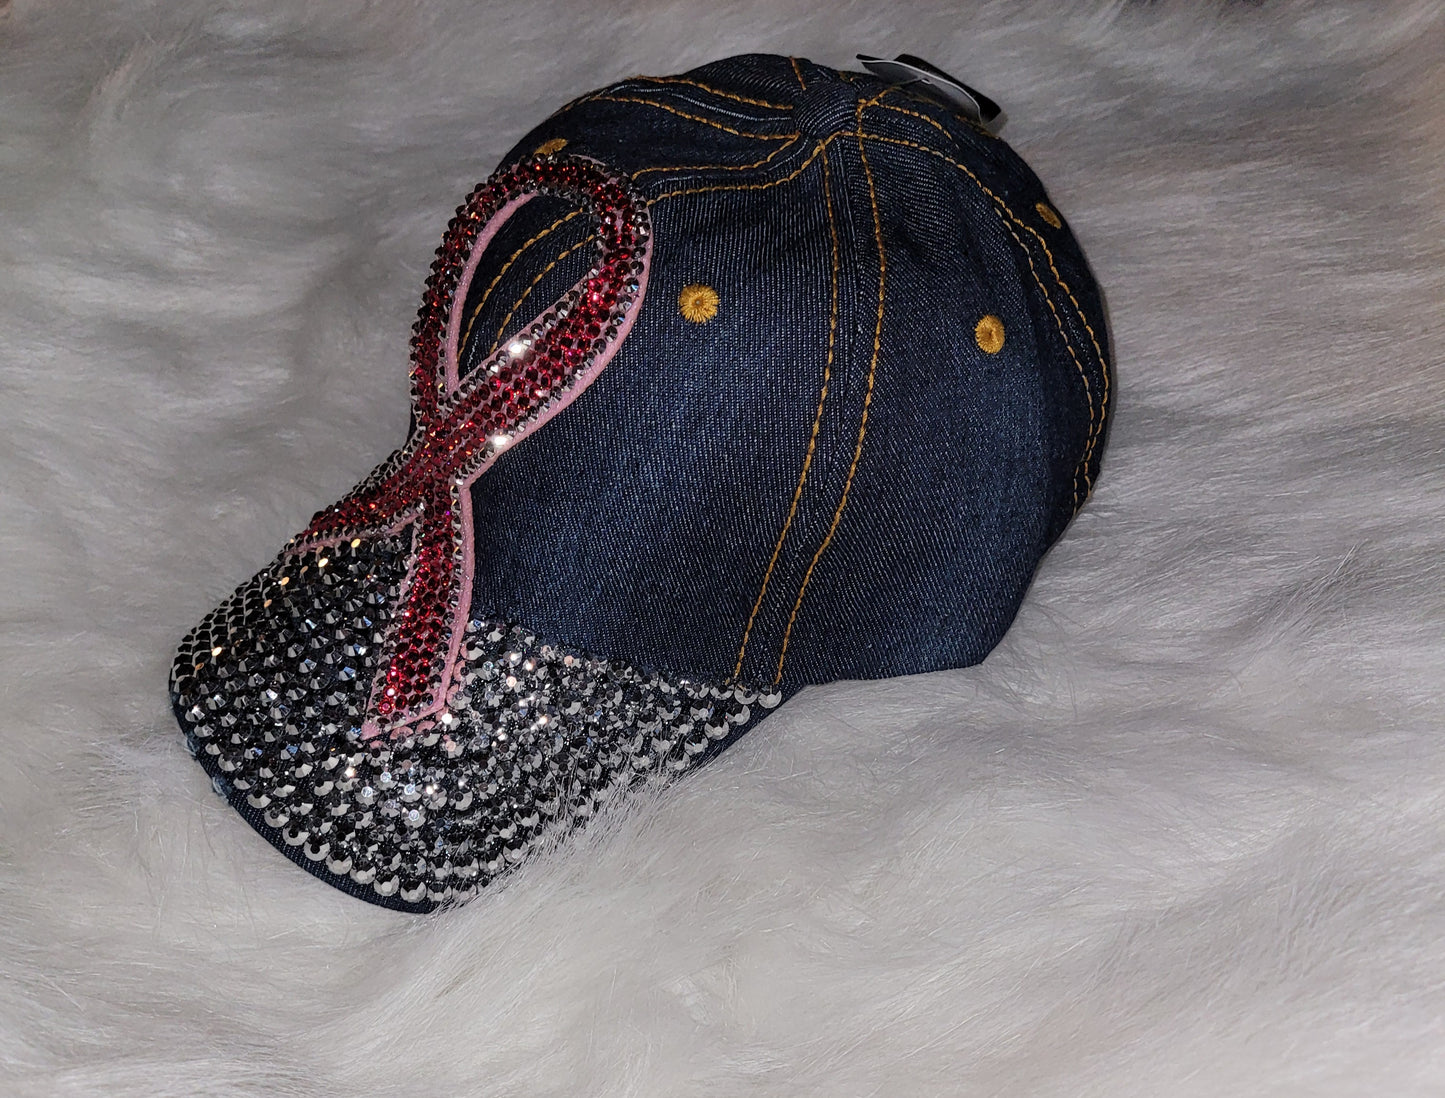 Blue Jean Breast Cancer Ribbon Jeweled Hat